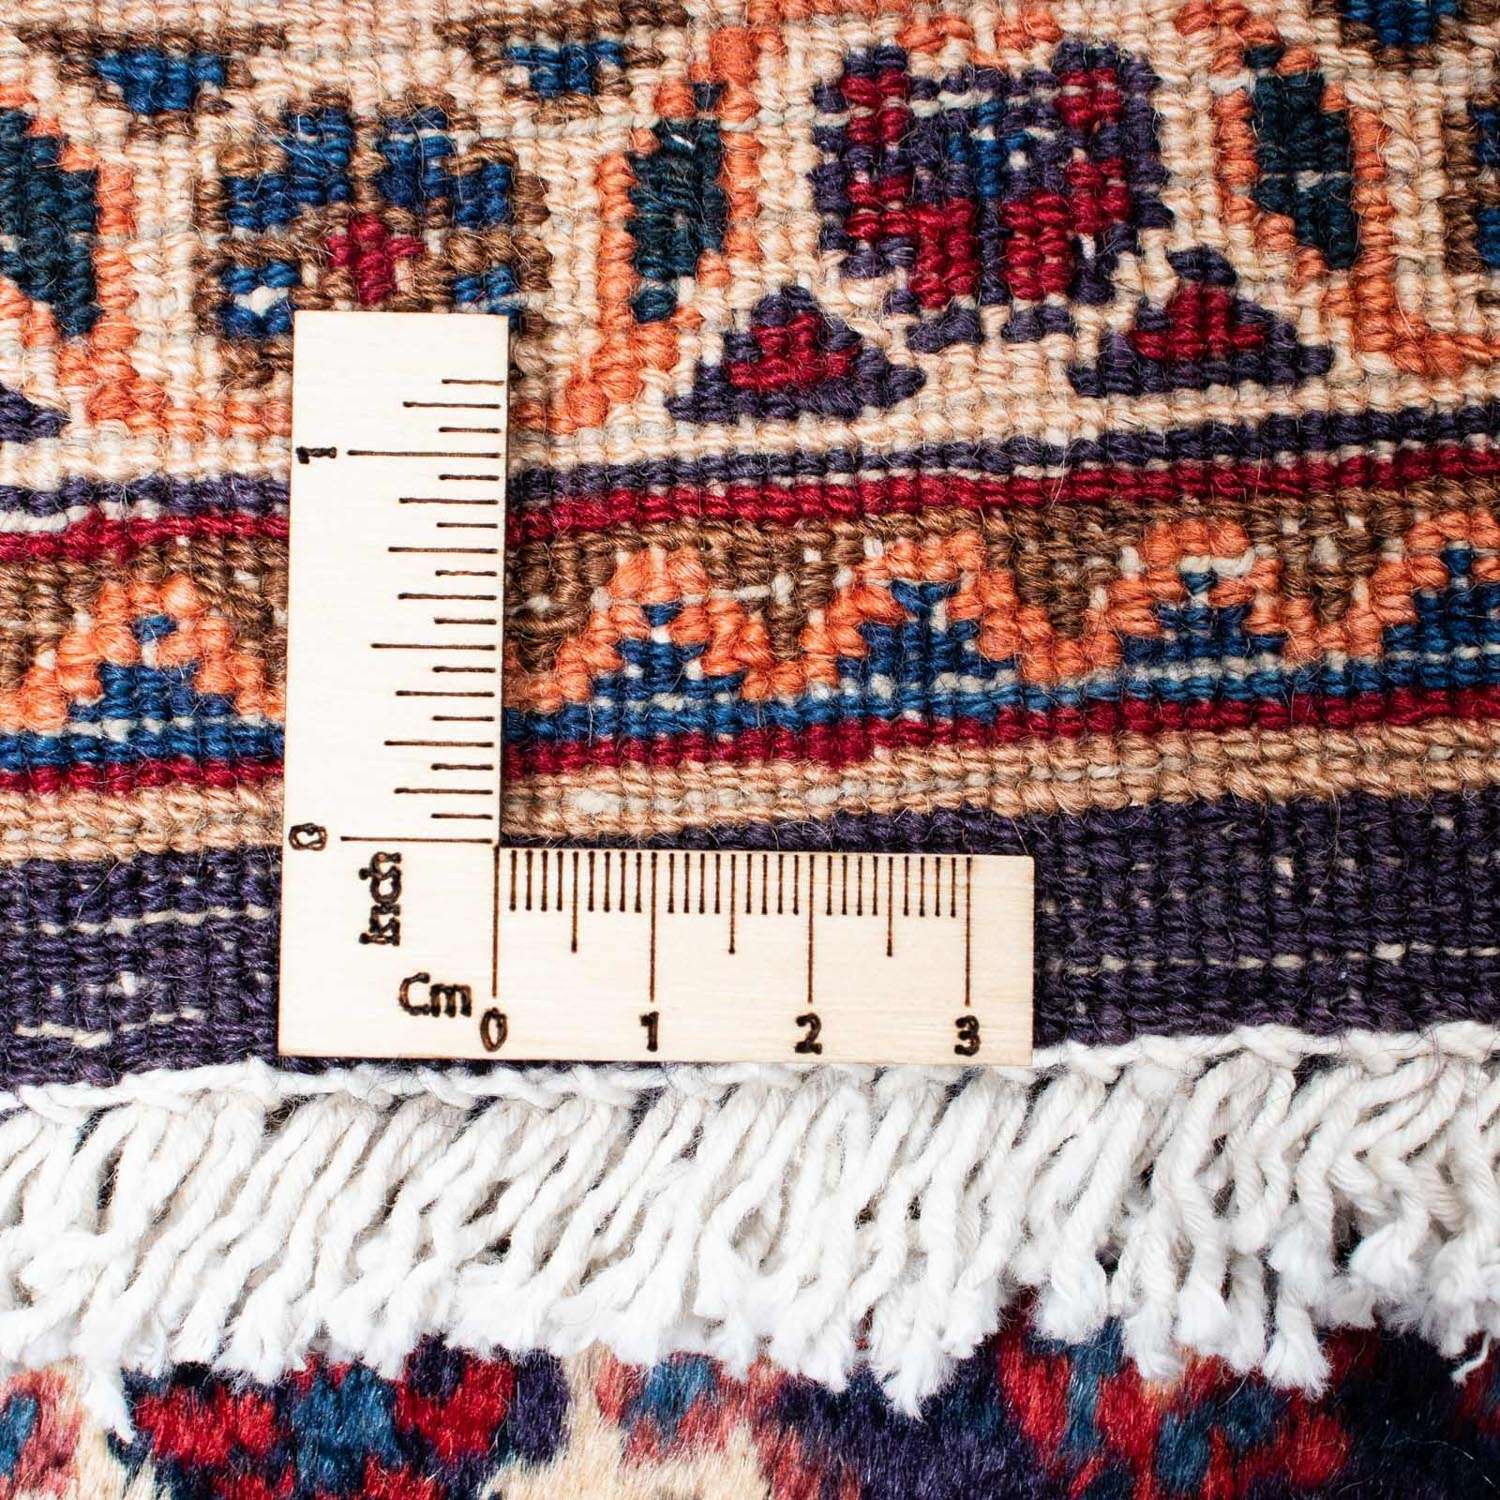 Persisk tæppe - Classic - 314 x 214 cm - lysrød